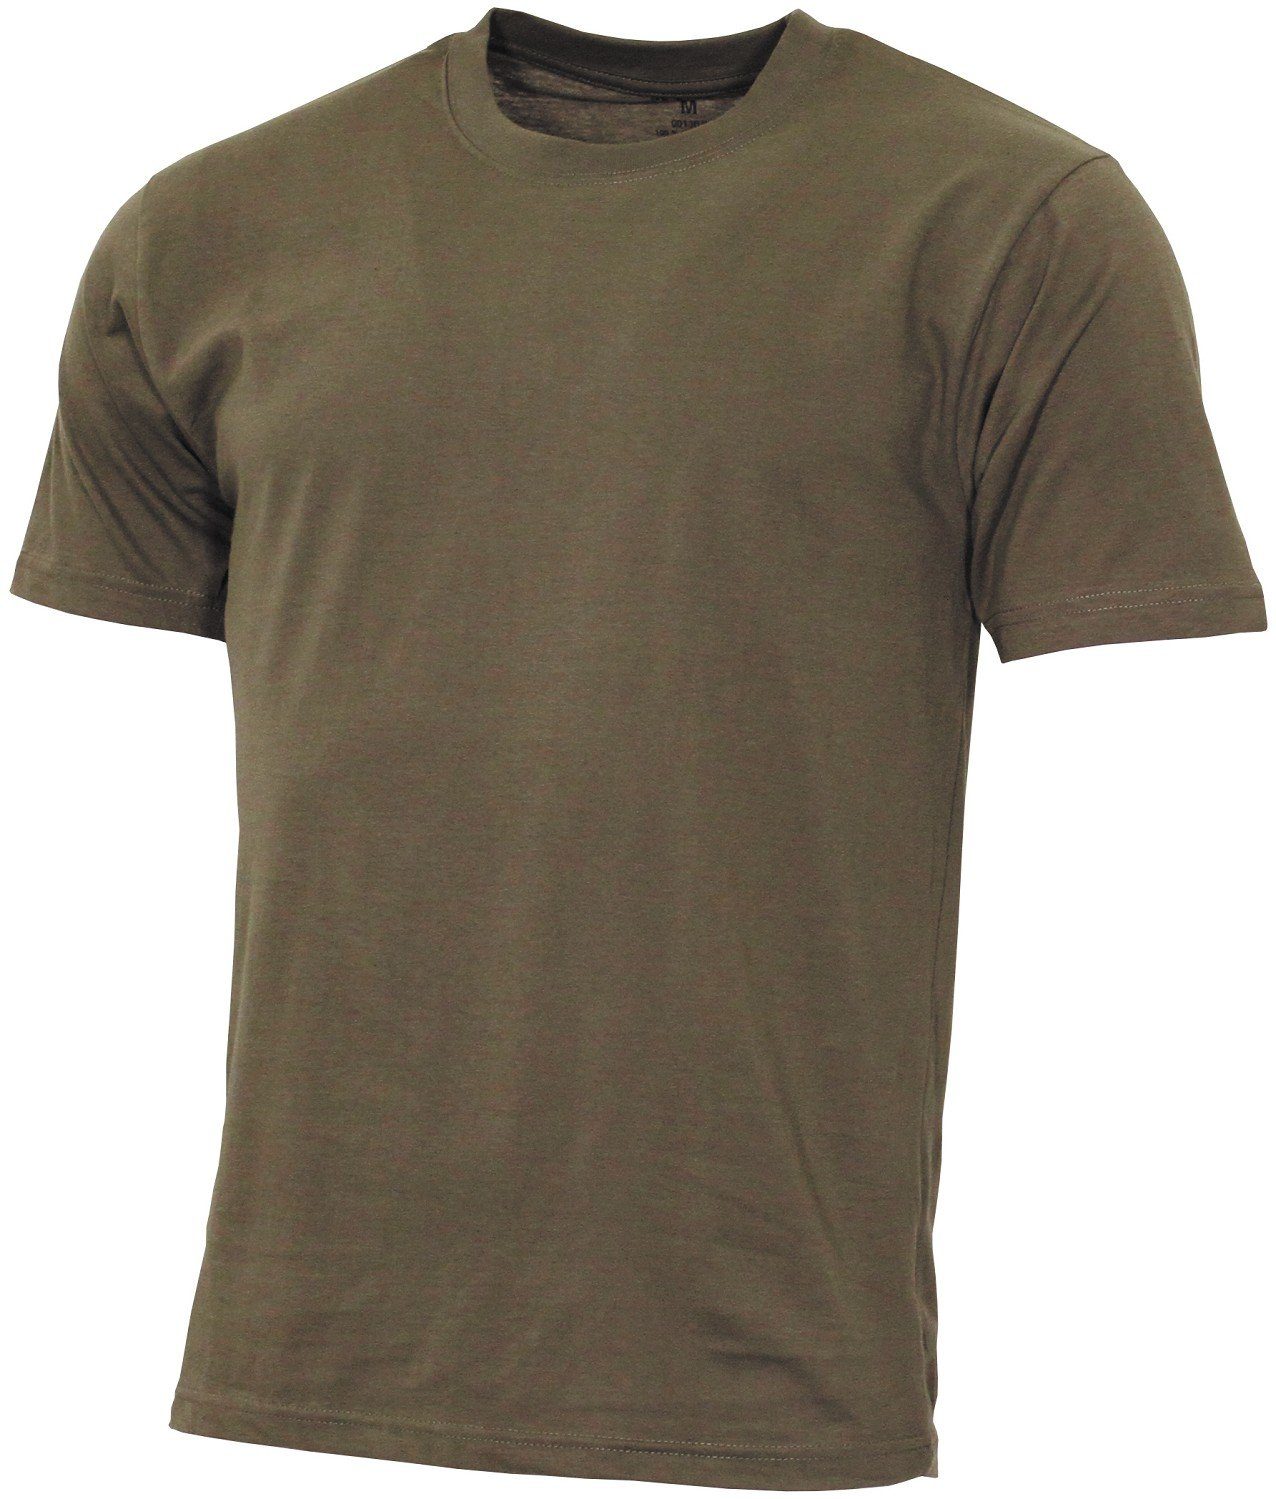 MFH T-Shirt Basic-T-Shirt oliv/grün Jagd-T-Shirt Baumwolle von Oefele Jagd NEU